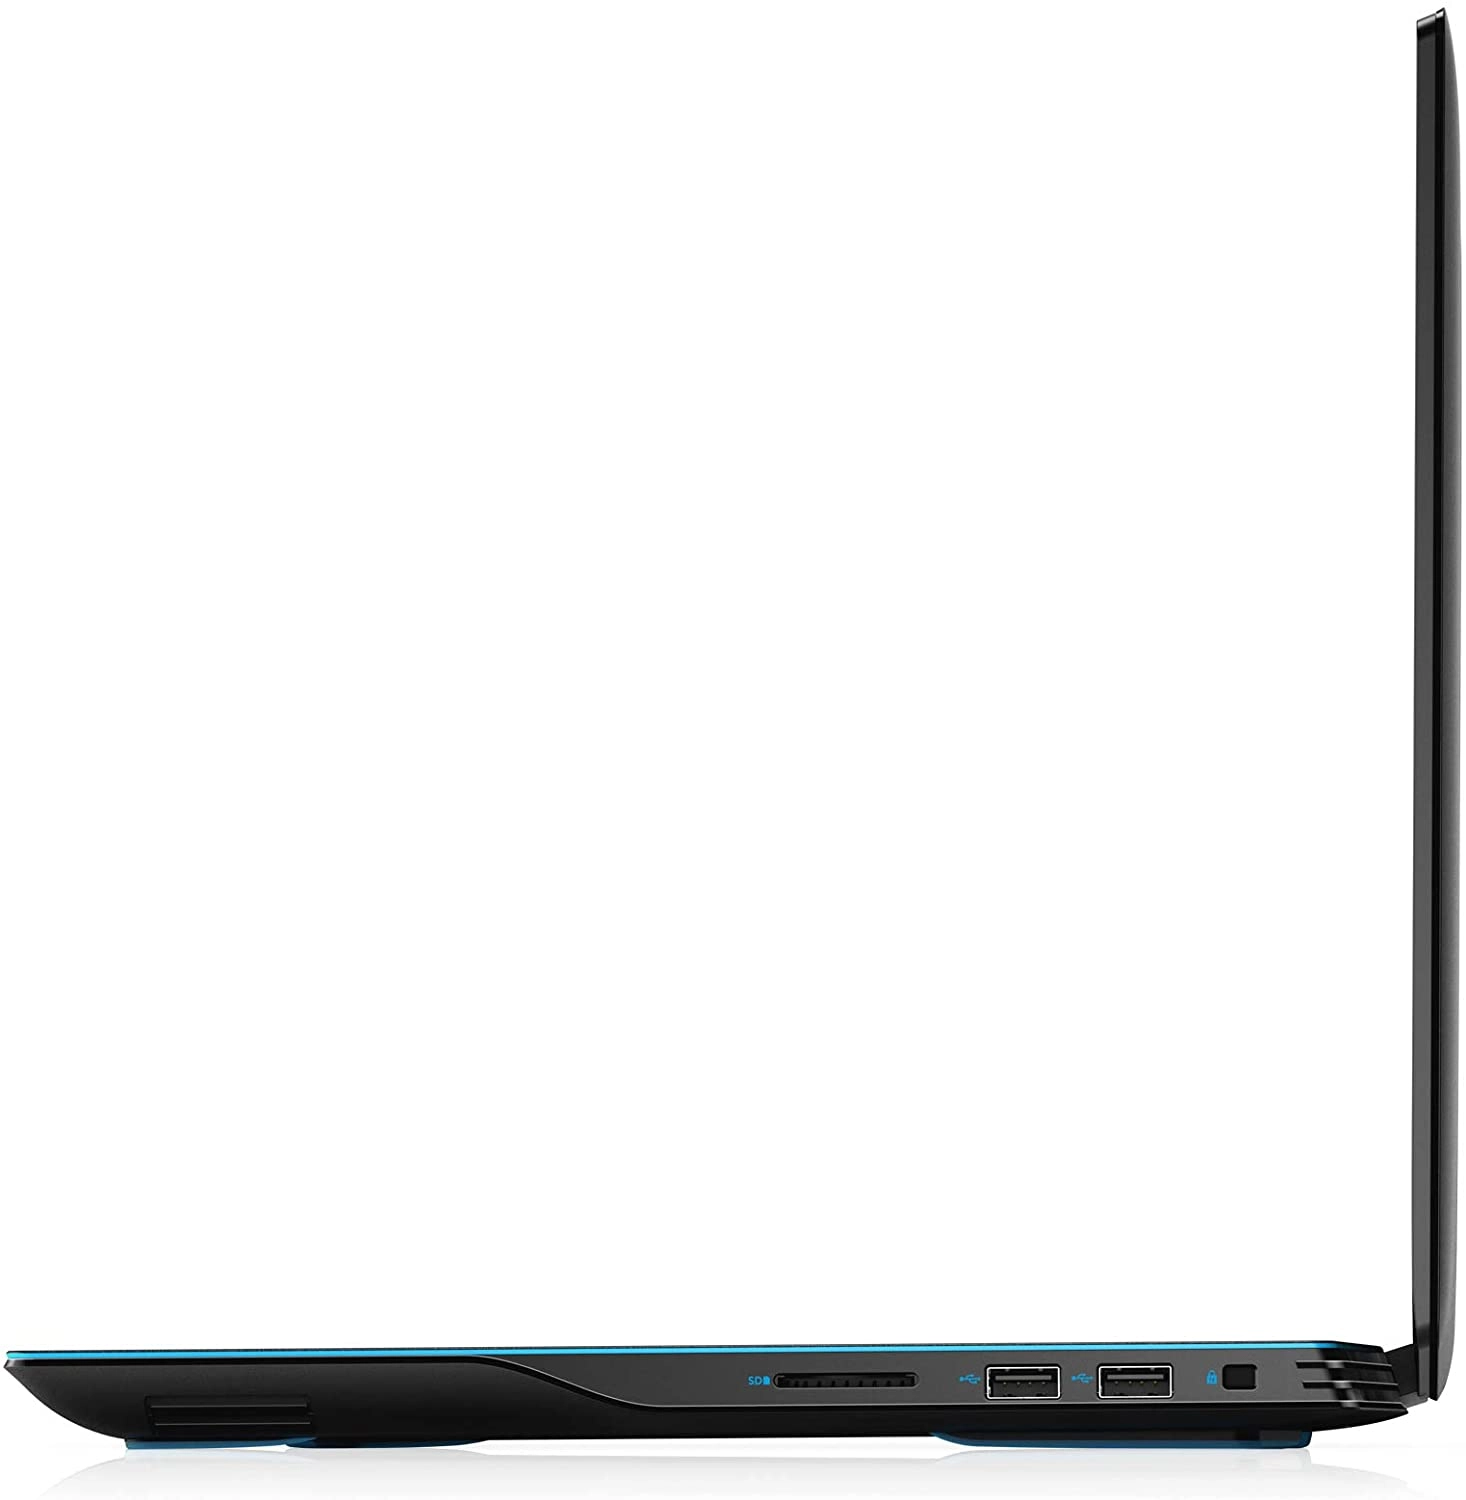 Dell I3500-7722BLK-PUS laptop image